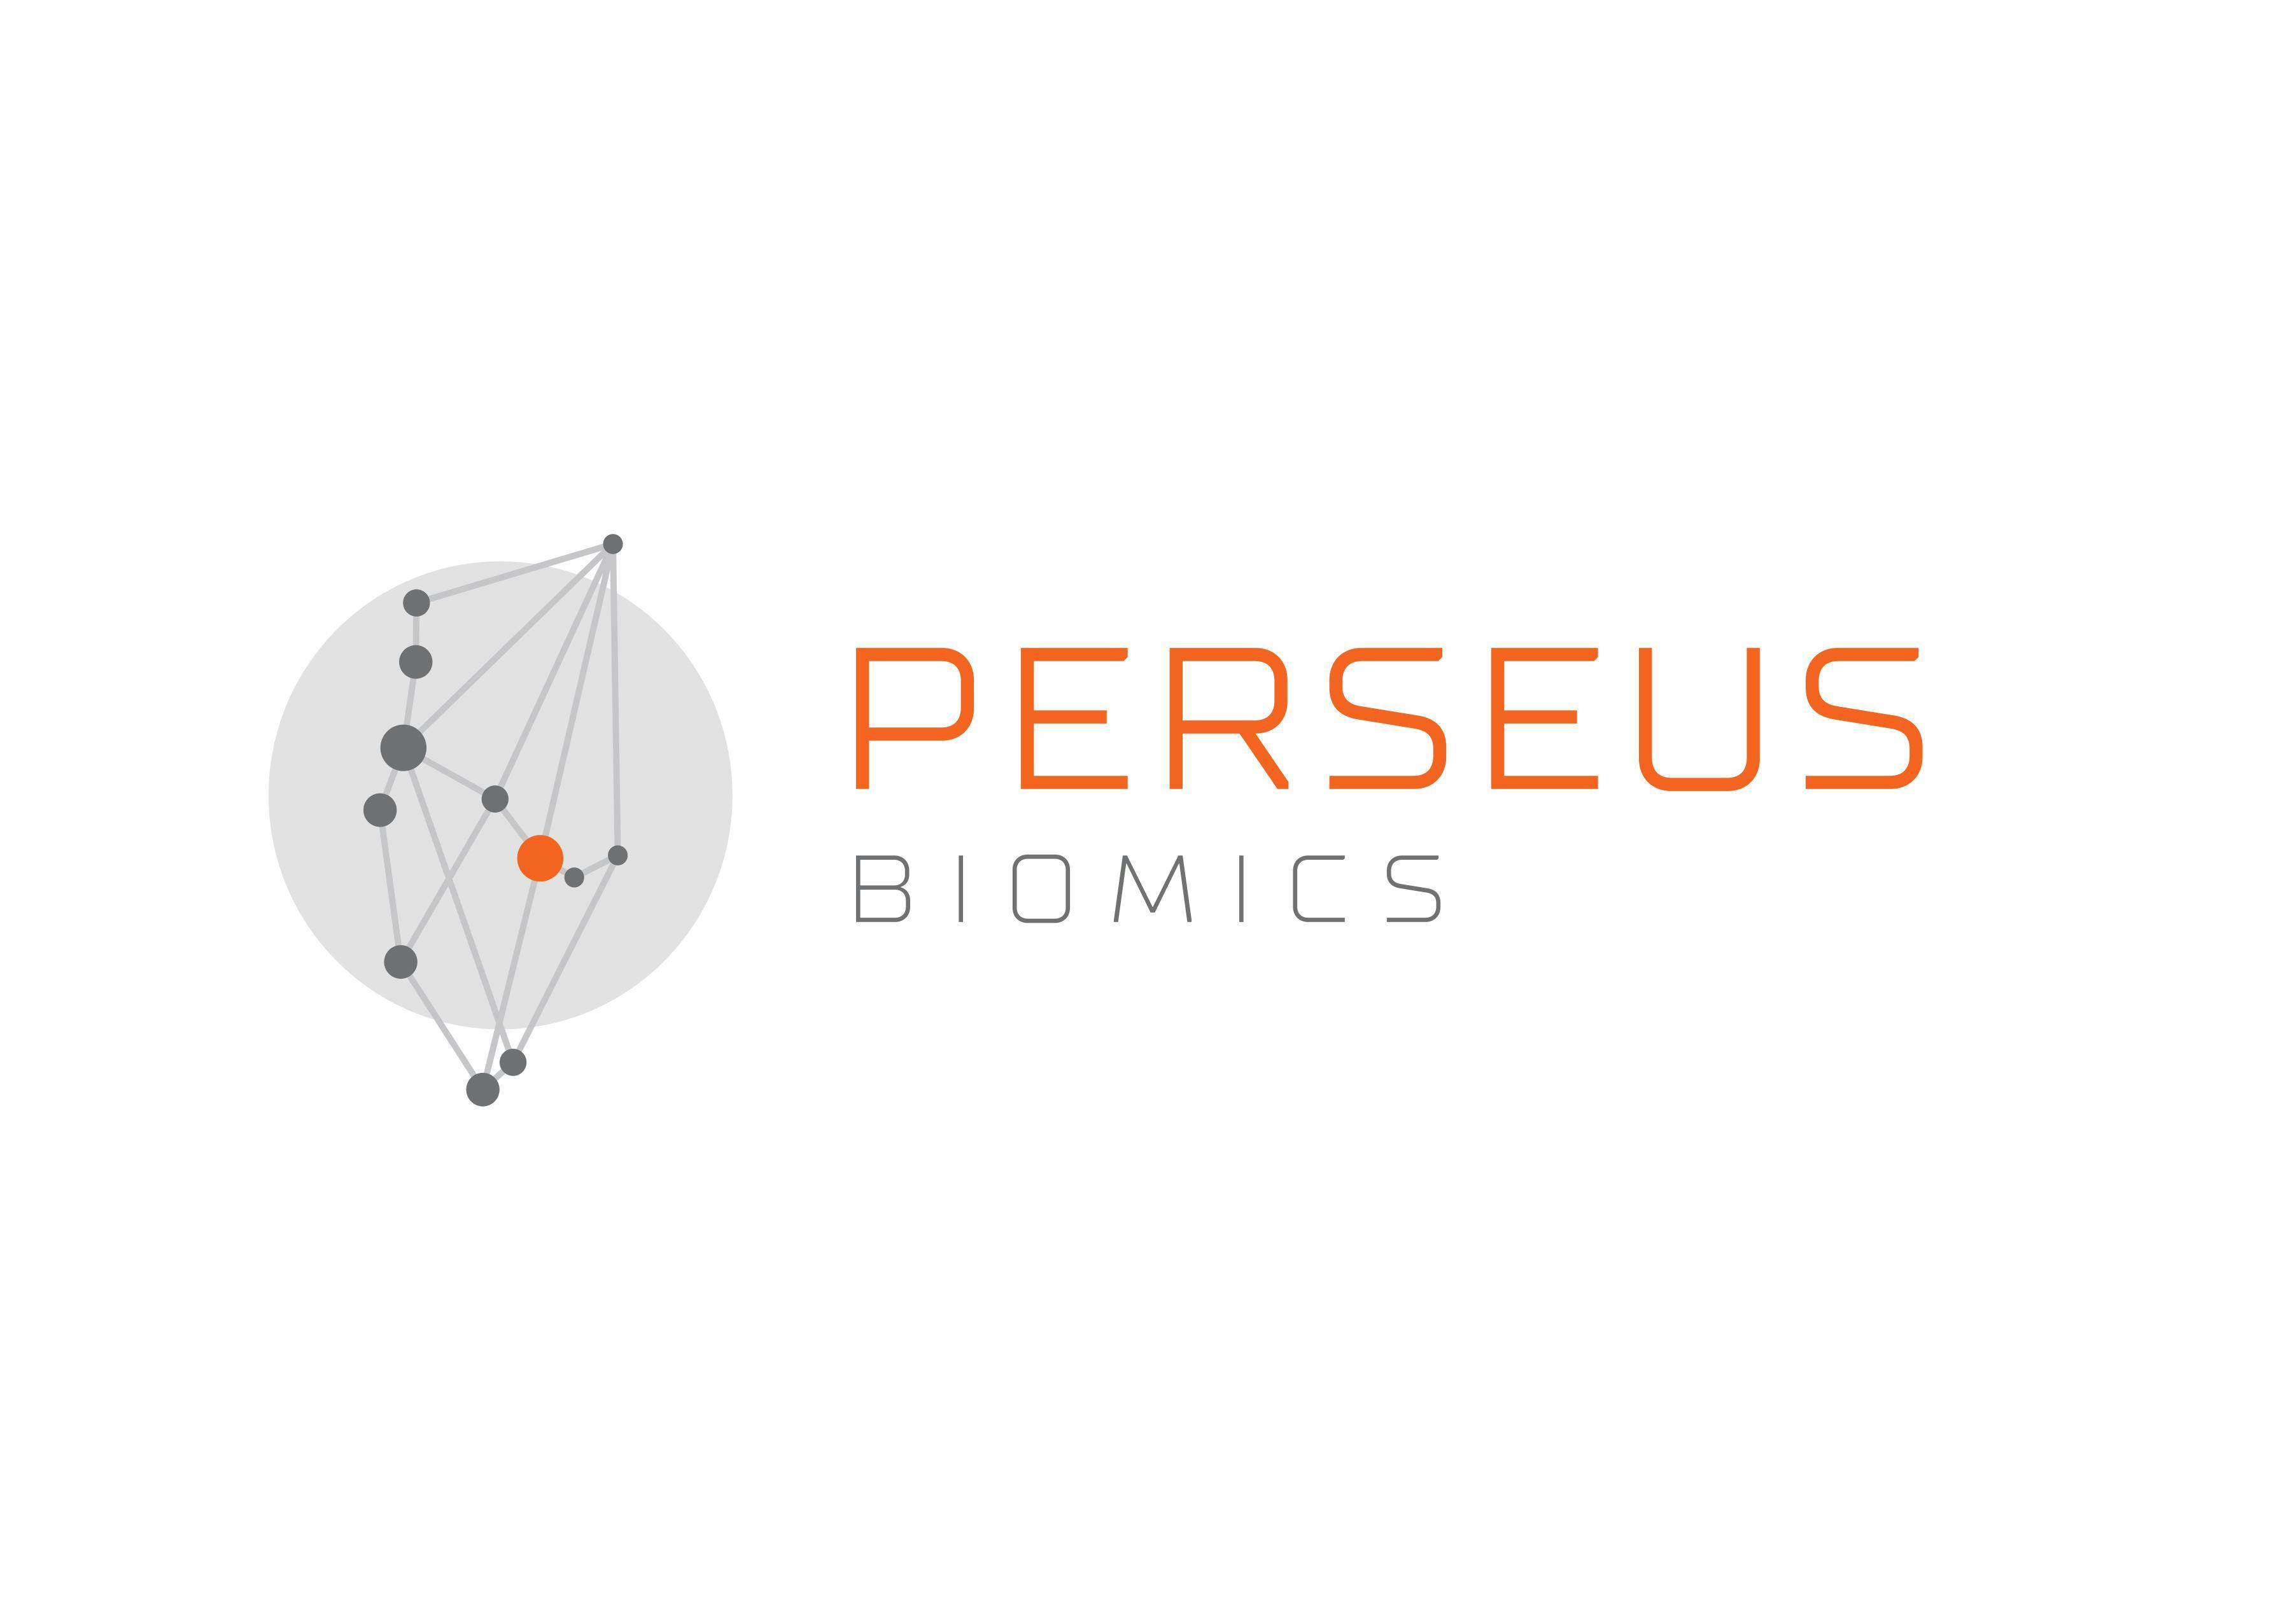 Perseus Biomics